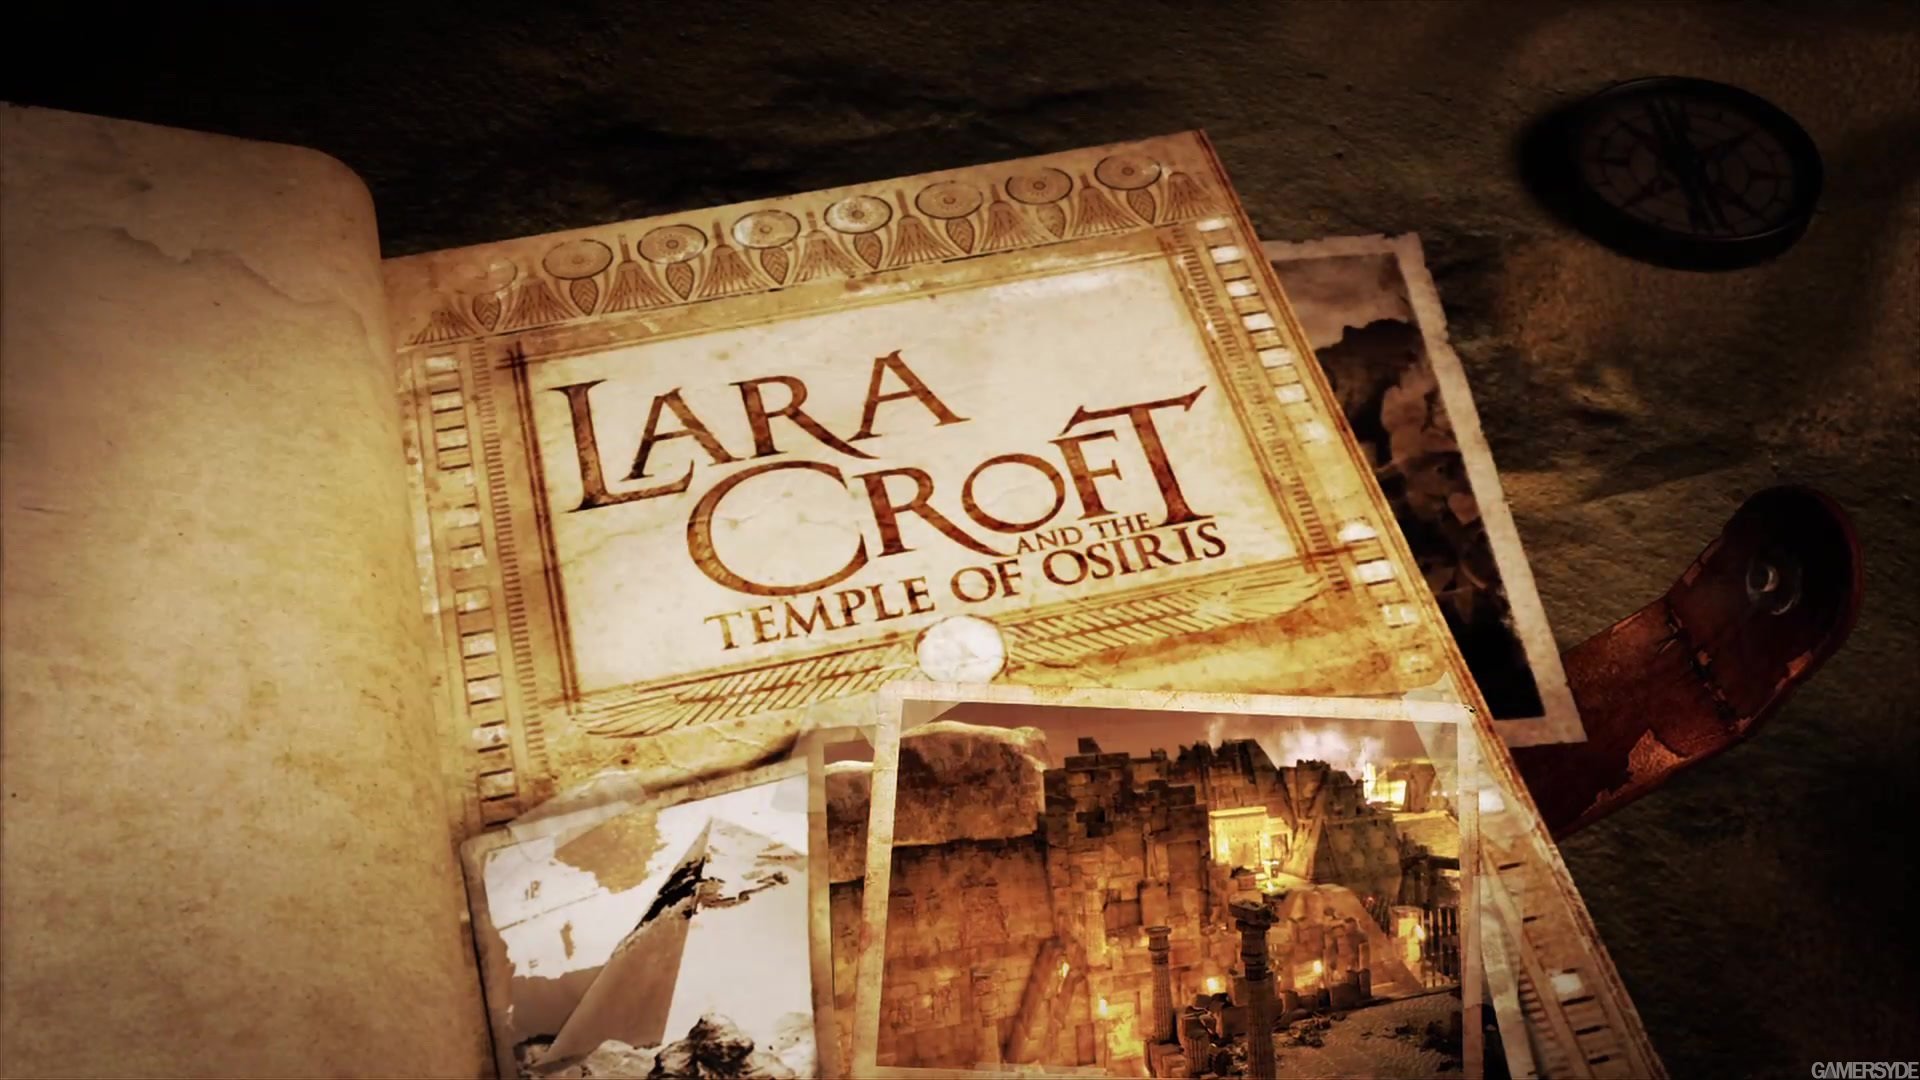 lara, Croft, Action, Adventure, Tomb, Raider, Platform, Fantasy, Girl, Girls, Warrior Wallpaper